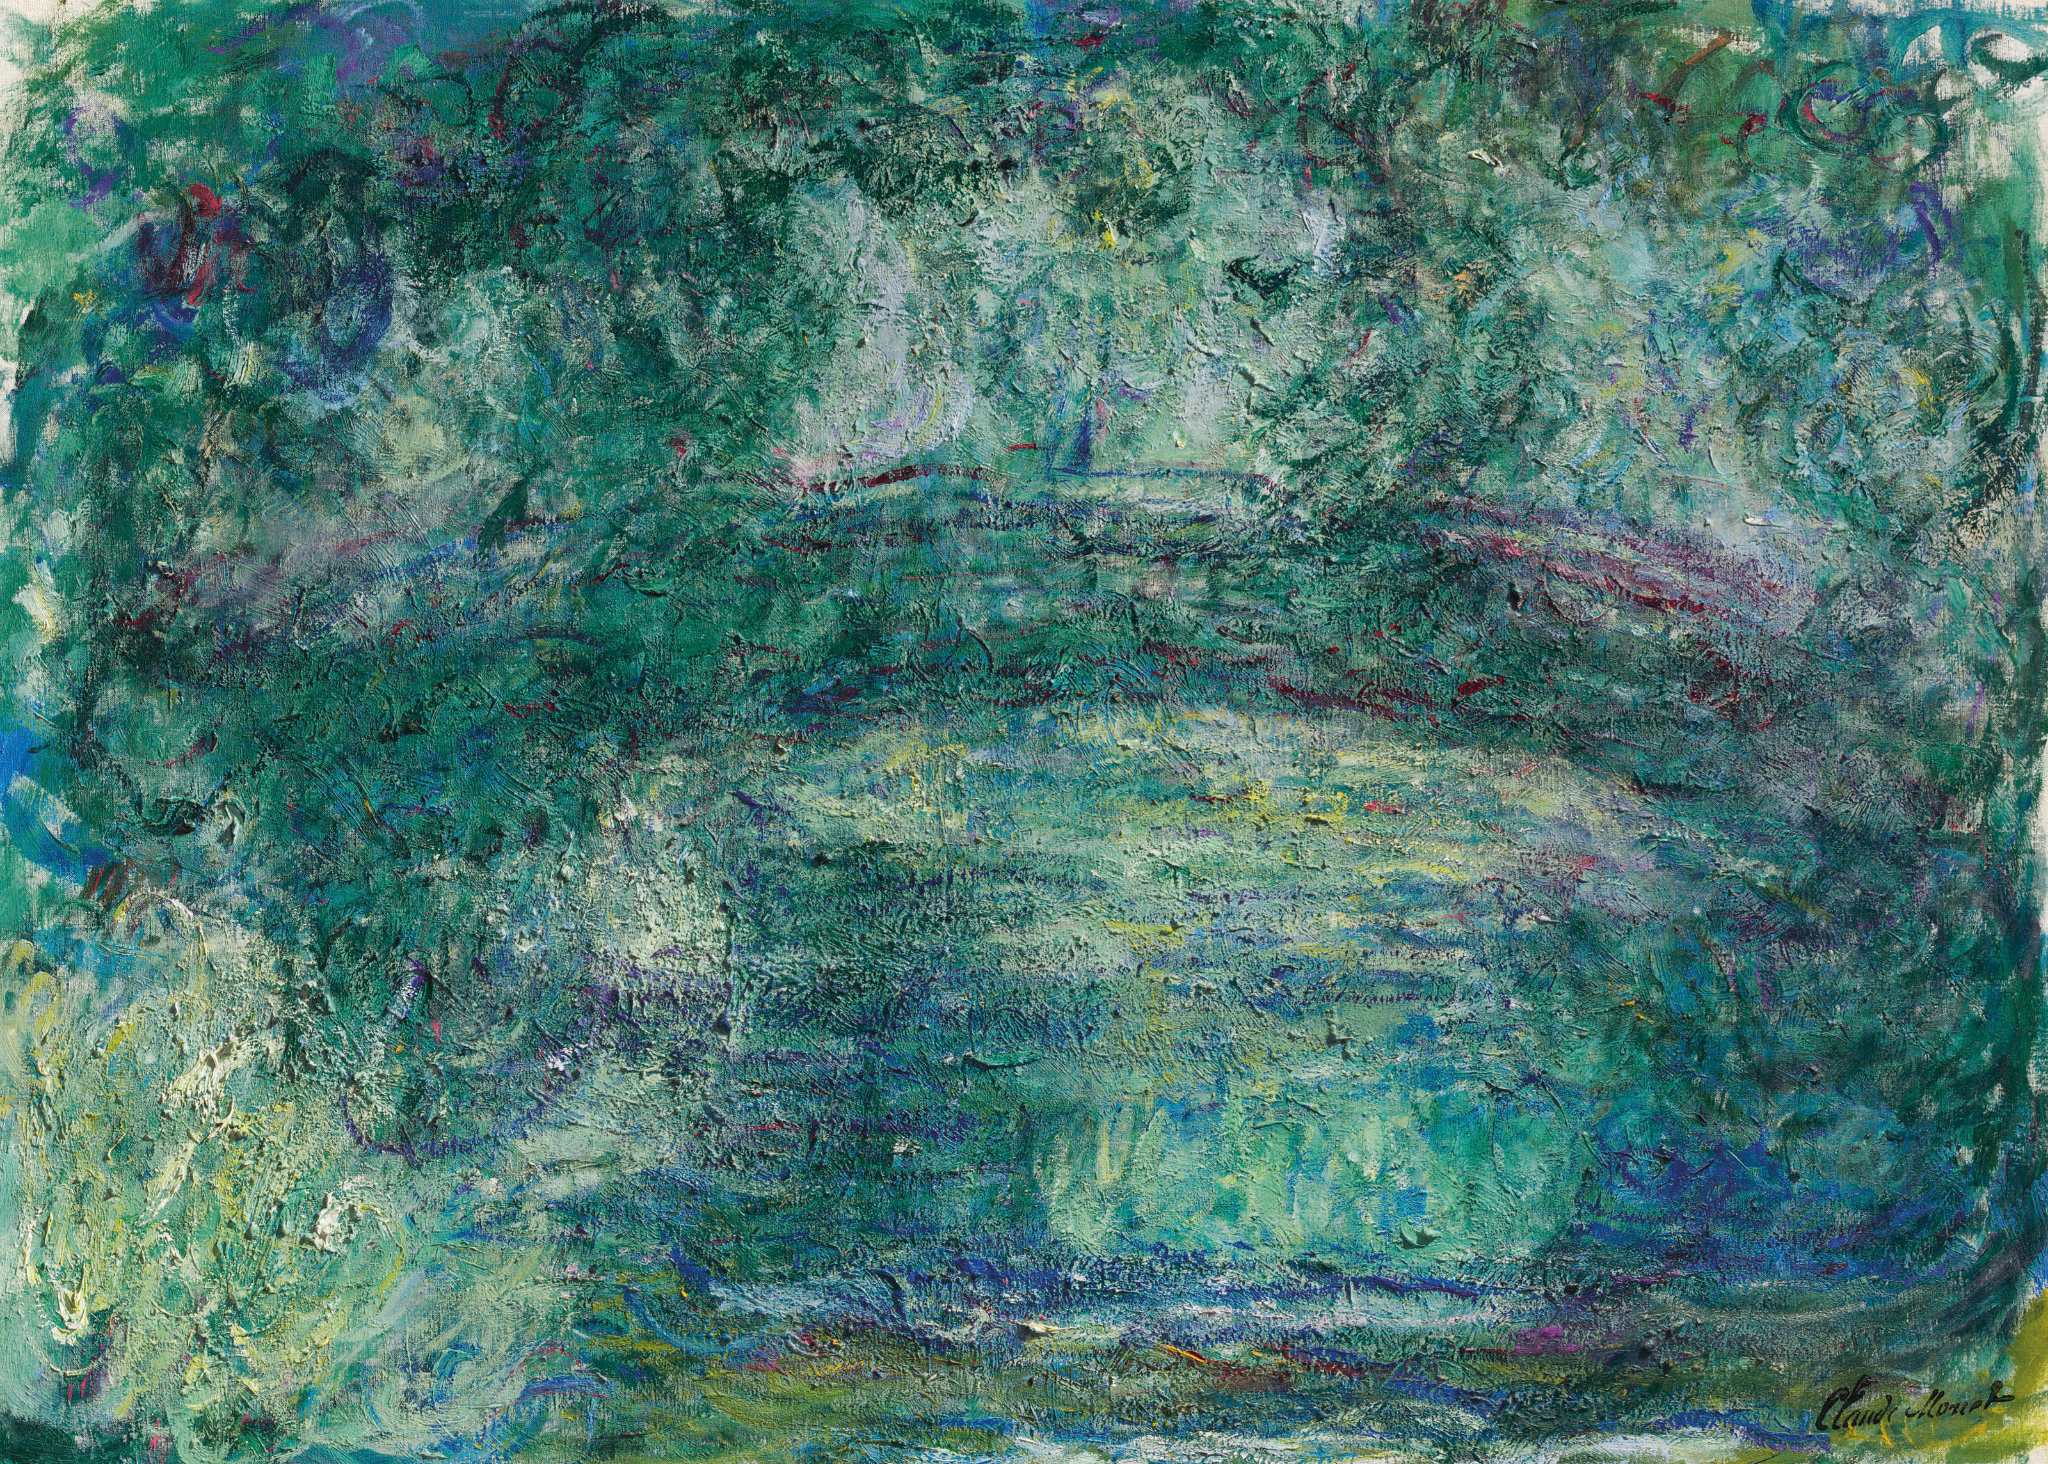 The Japanese Bridge by Claude Monet - circa 1918-1924 - 73 x 100.3 cm private collection